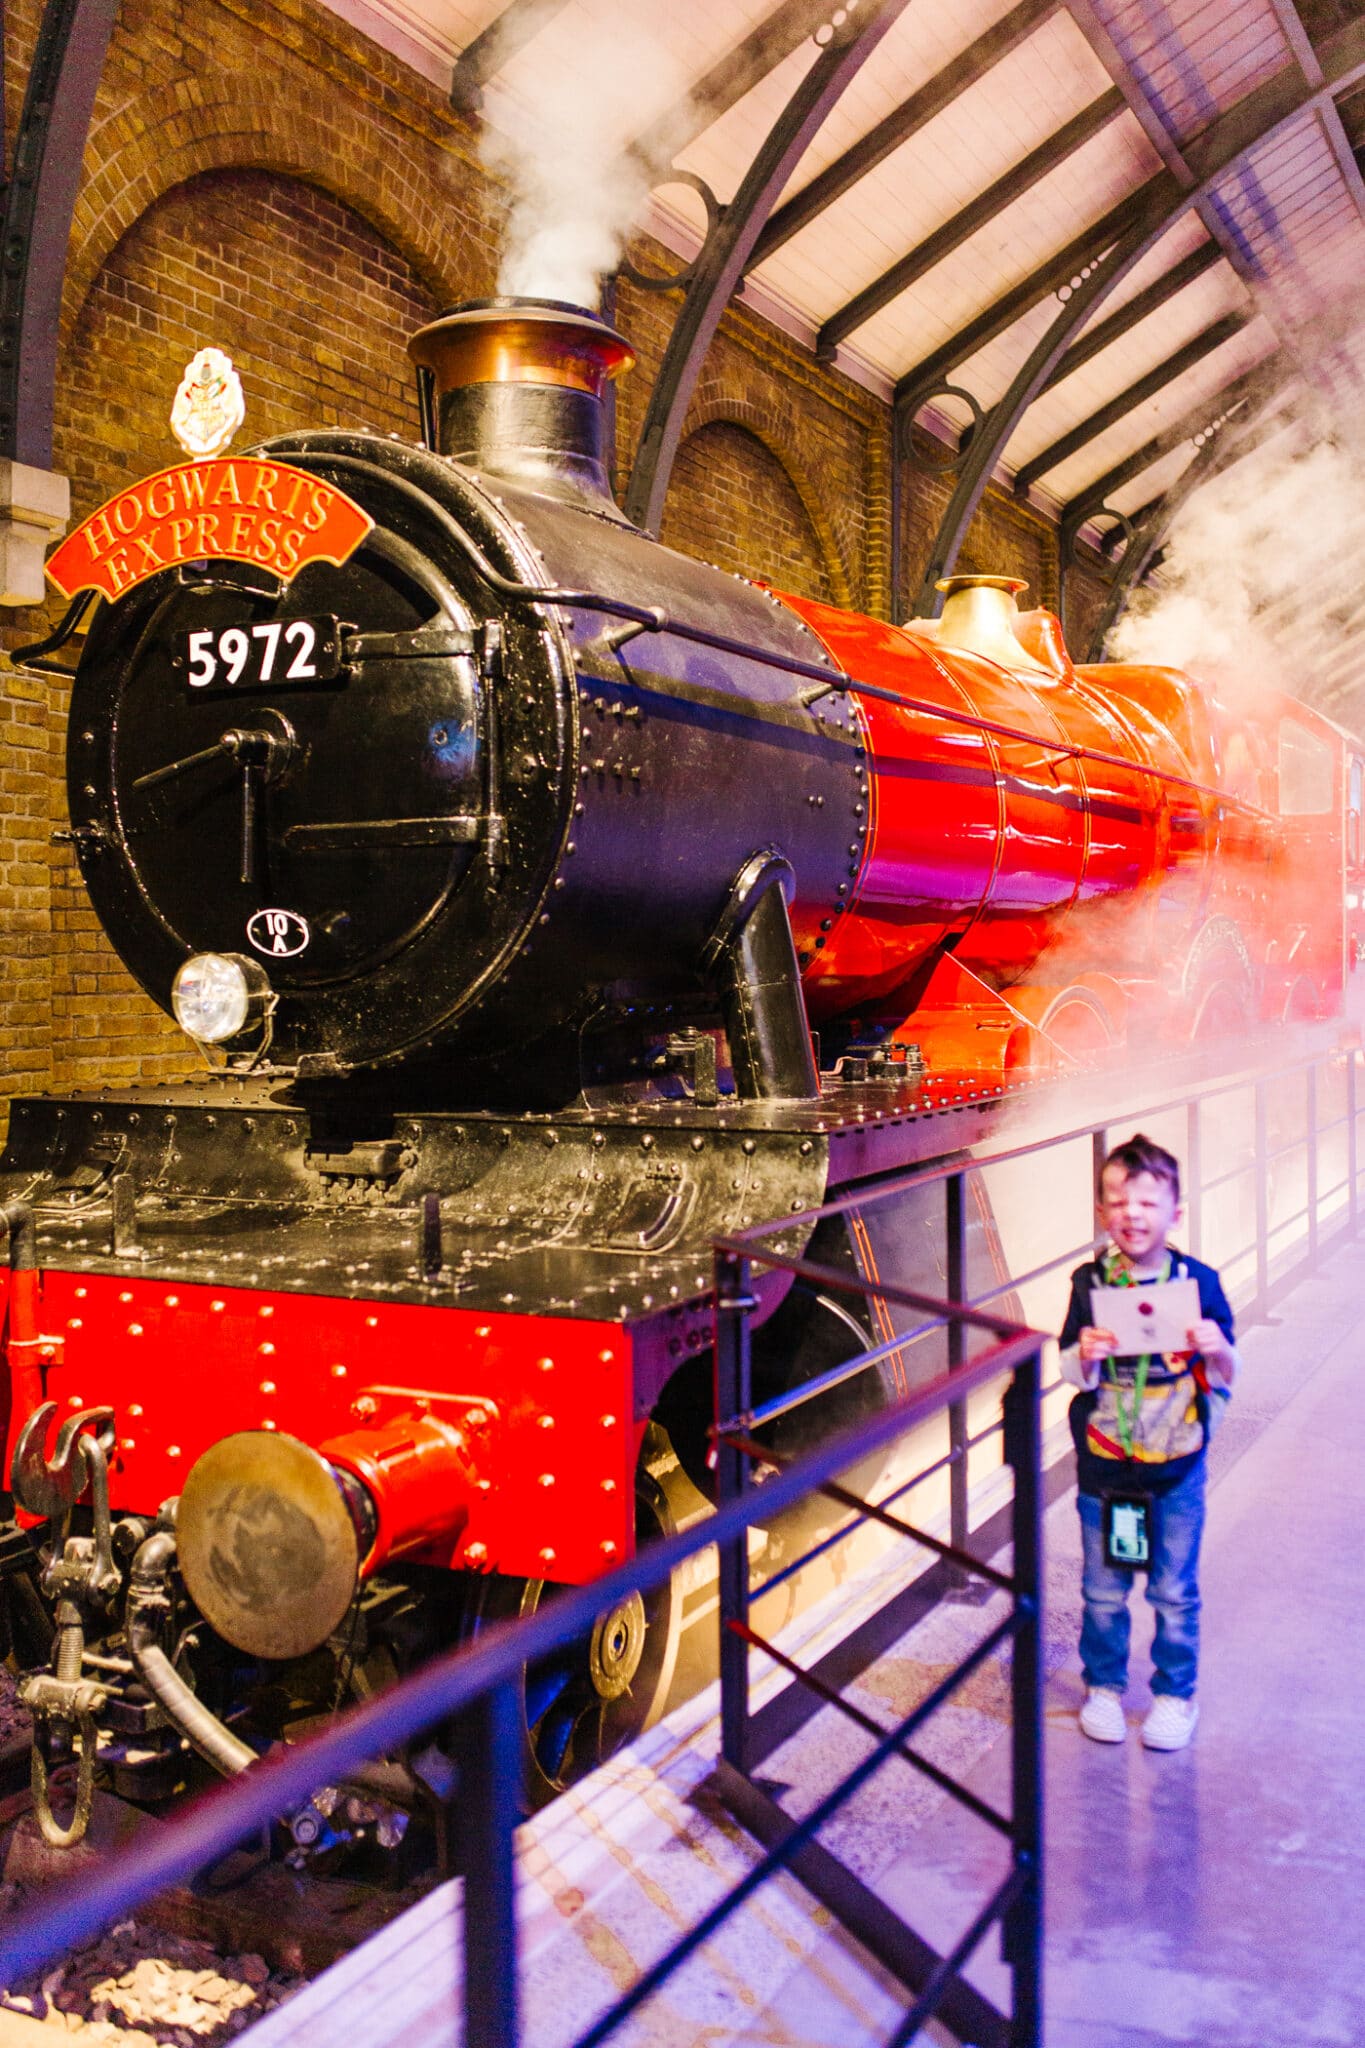 The Hogwarts Express train at the Harry Potter Studio Tour London. 